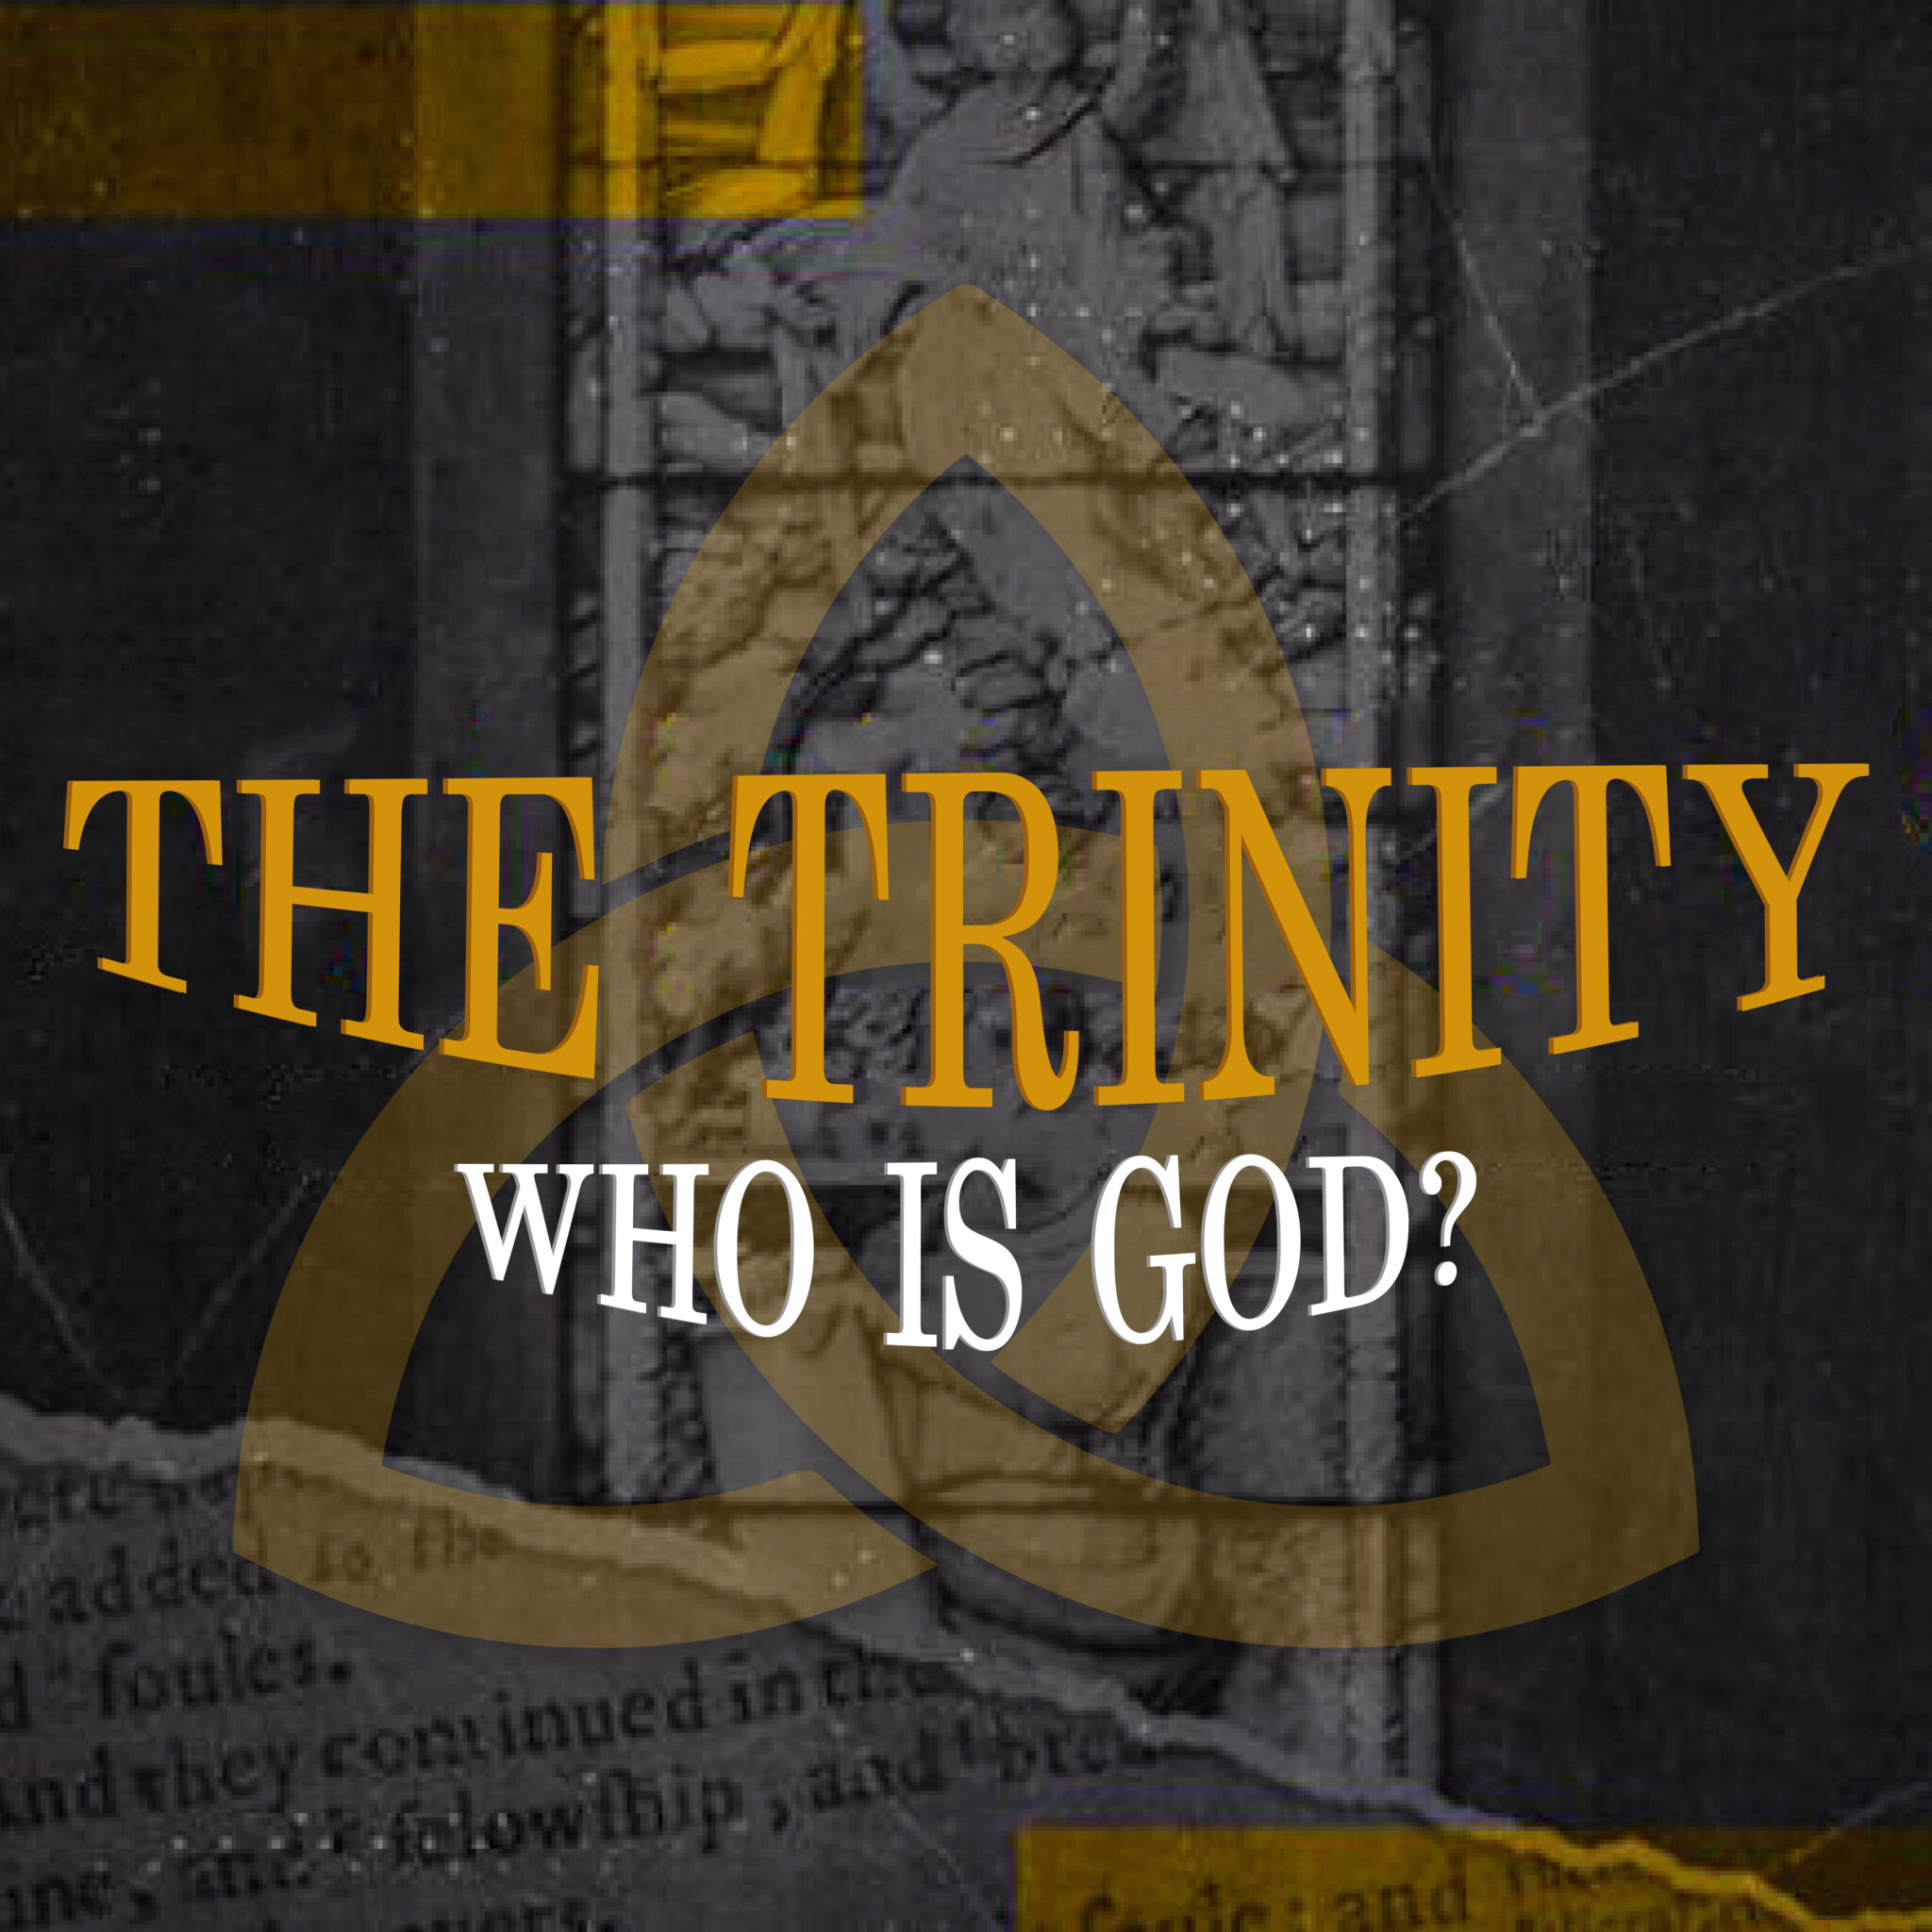 Trinity: The Saving God